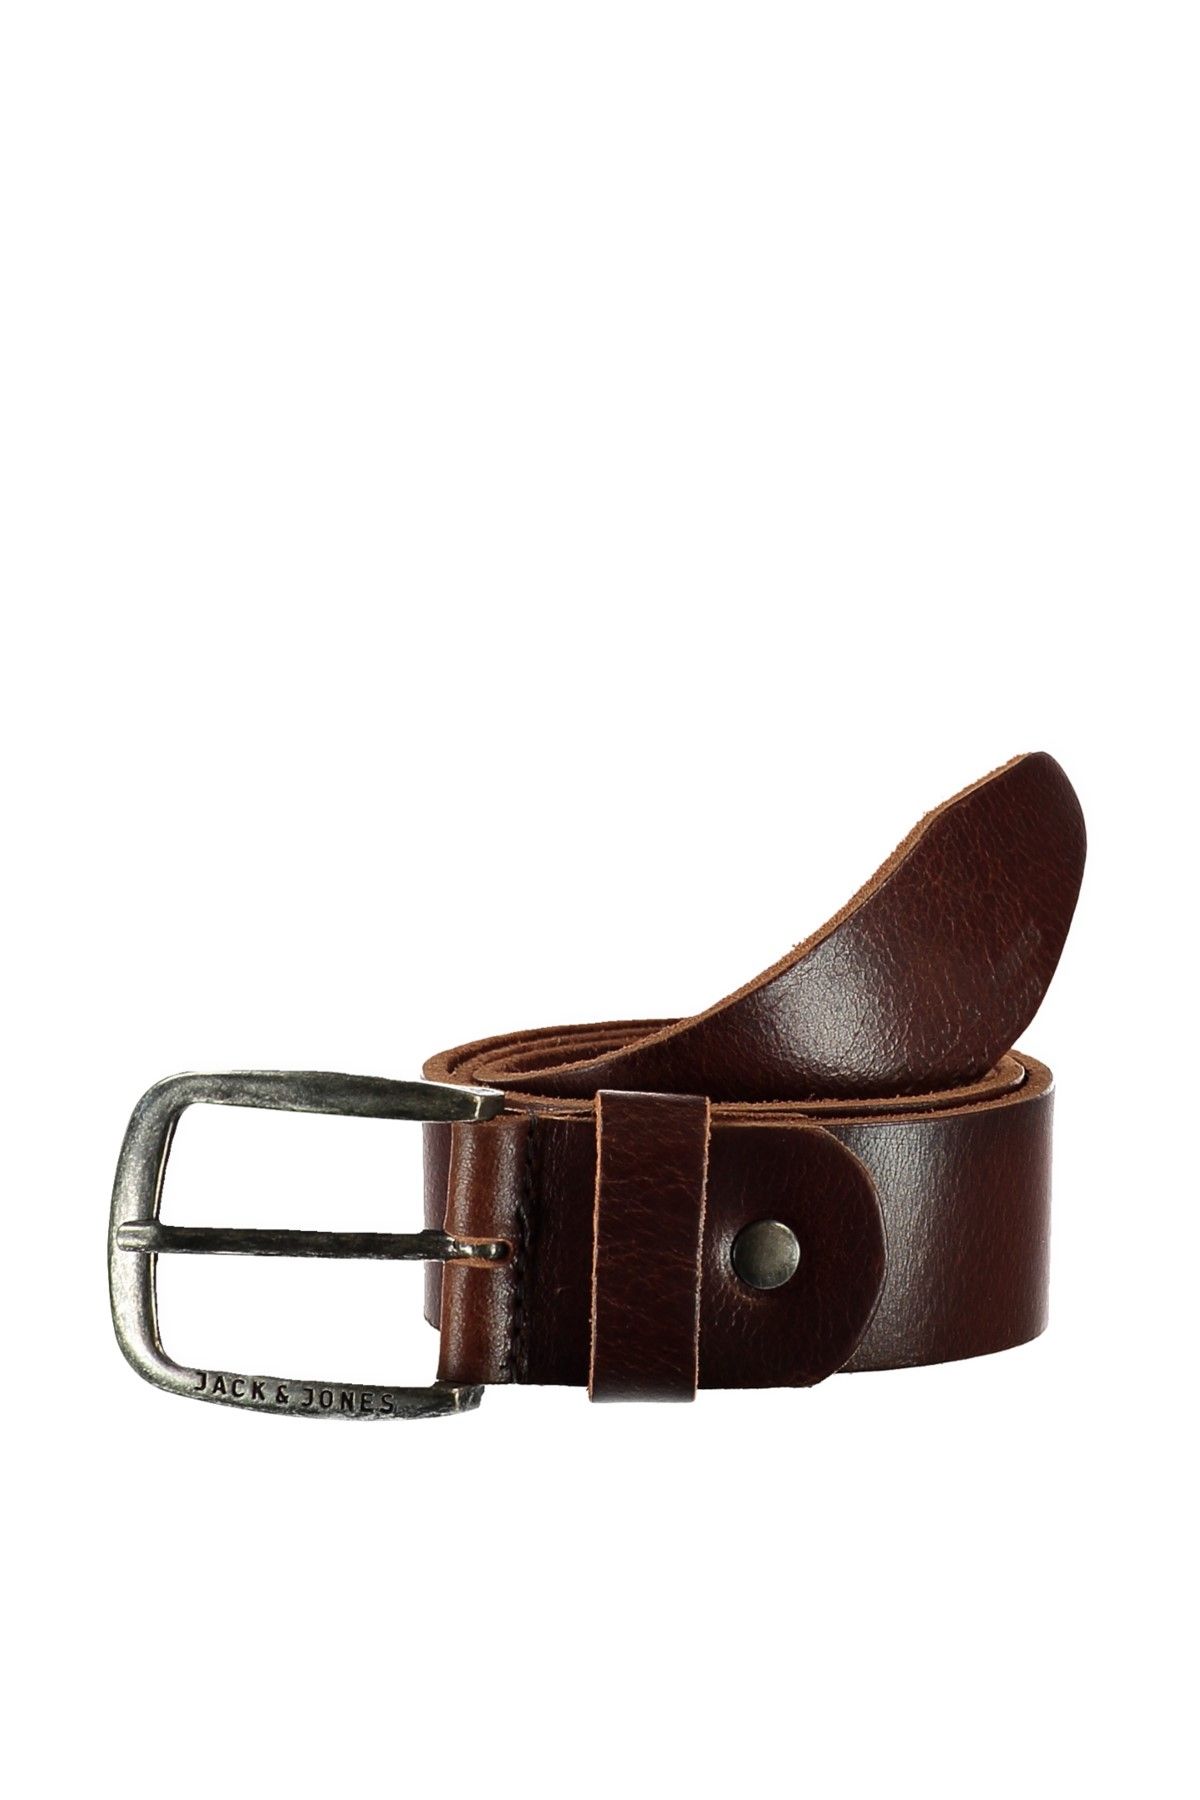 Jack & Jones Kemer - Paul Leather Belt-12111286